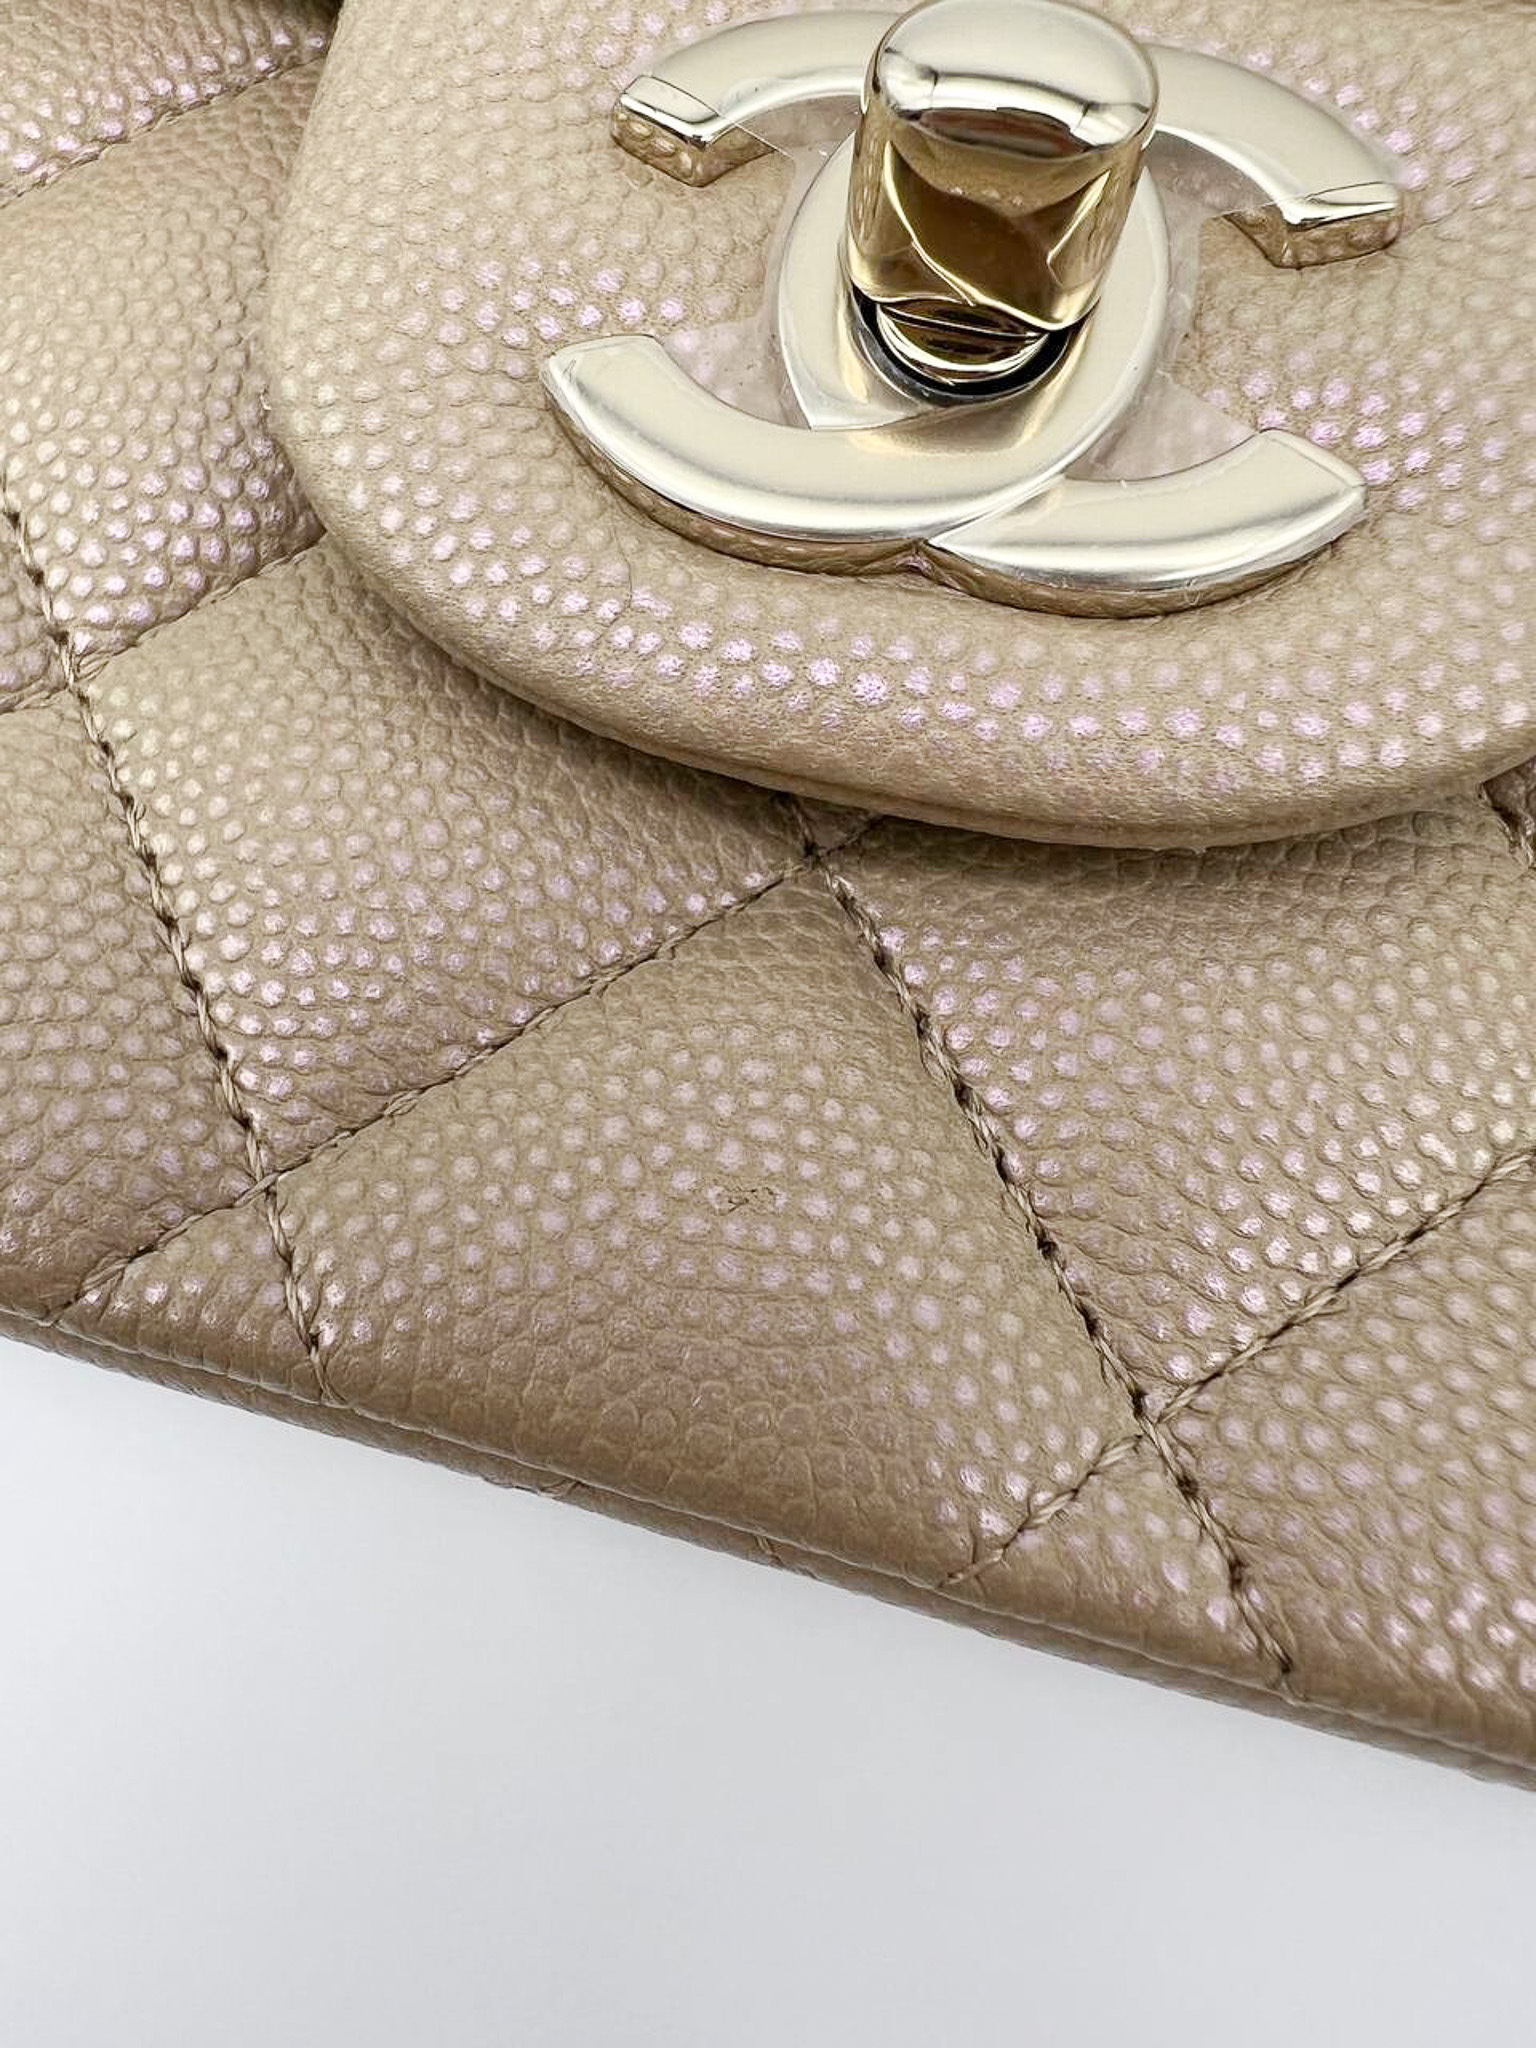 Chanel Classic Medium Double Flap, Iridescent Dark Beige Caviar Gold  Hardware, Preowned in Box MA001 - Julia Rose Boston